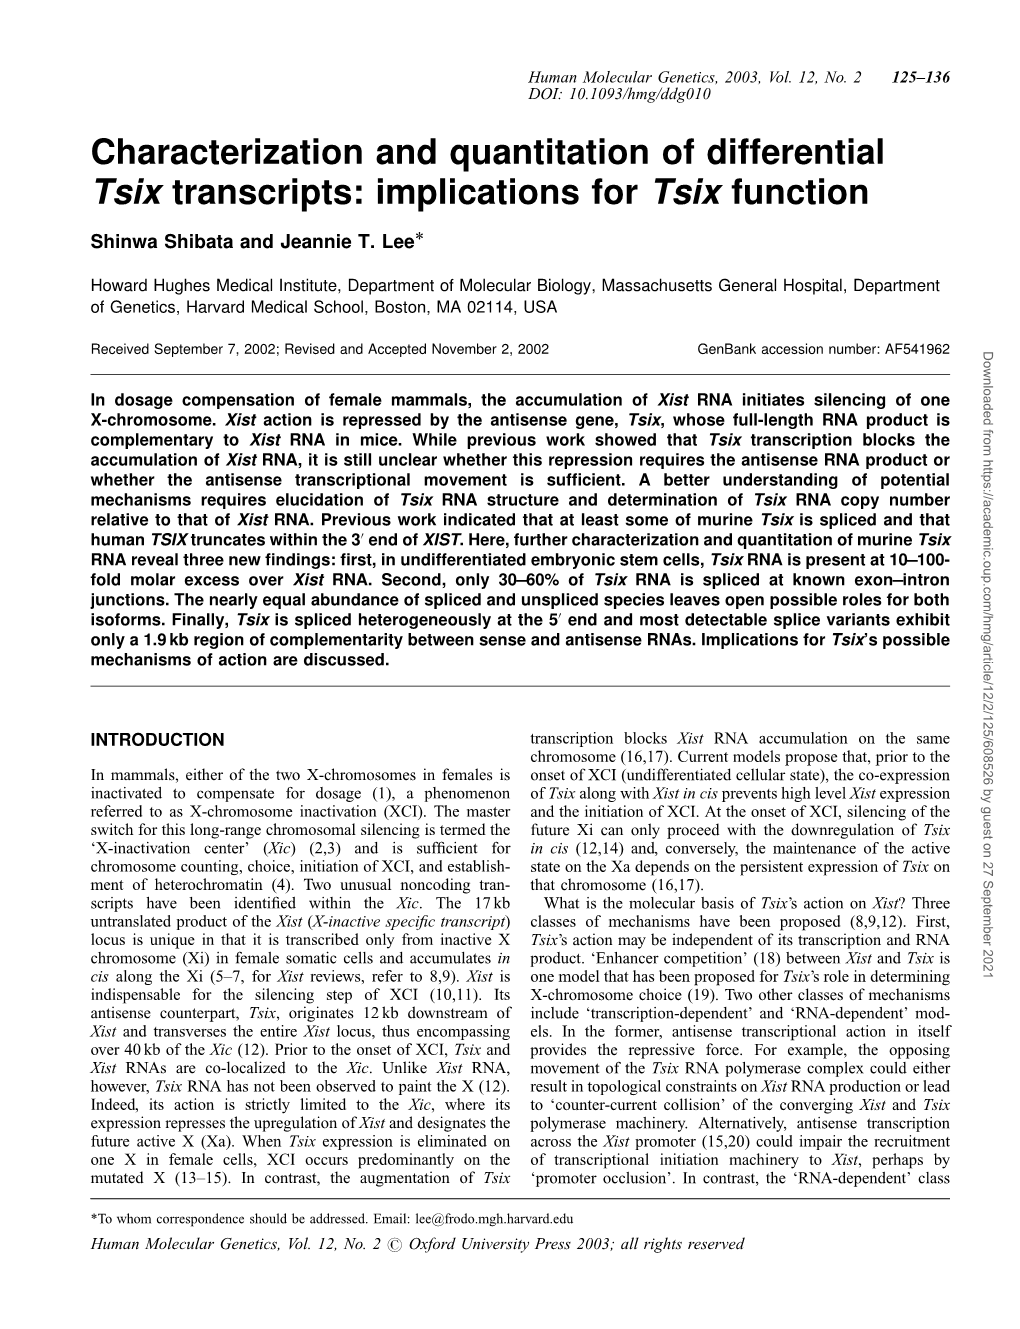 Implications for Tsix Function